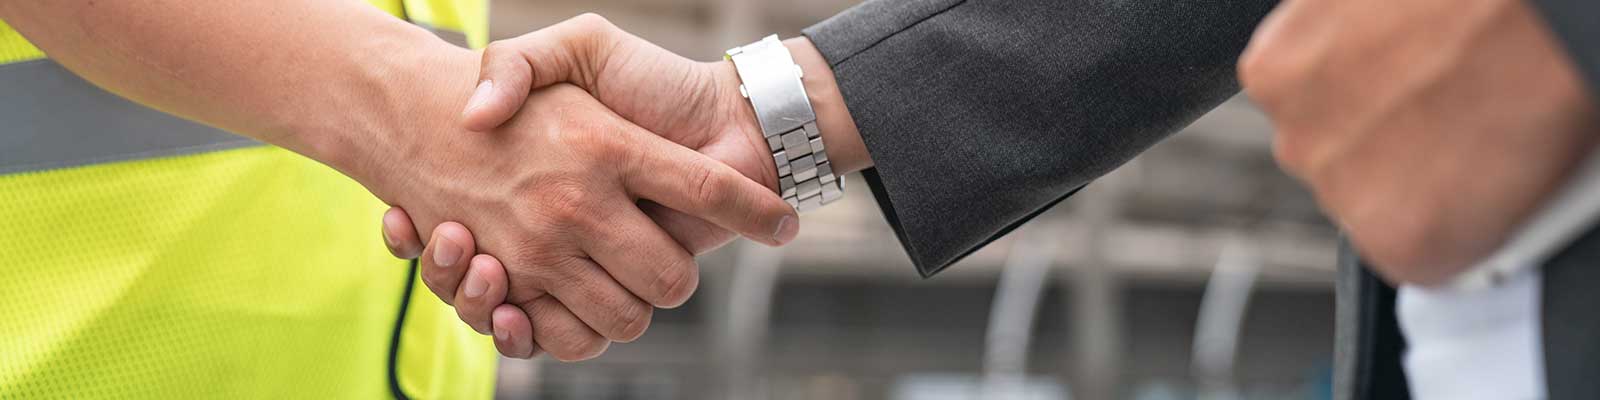 close up of handshake between man in suit and construction vest